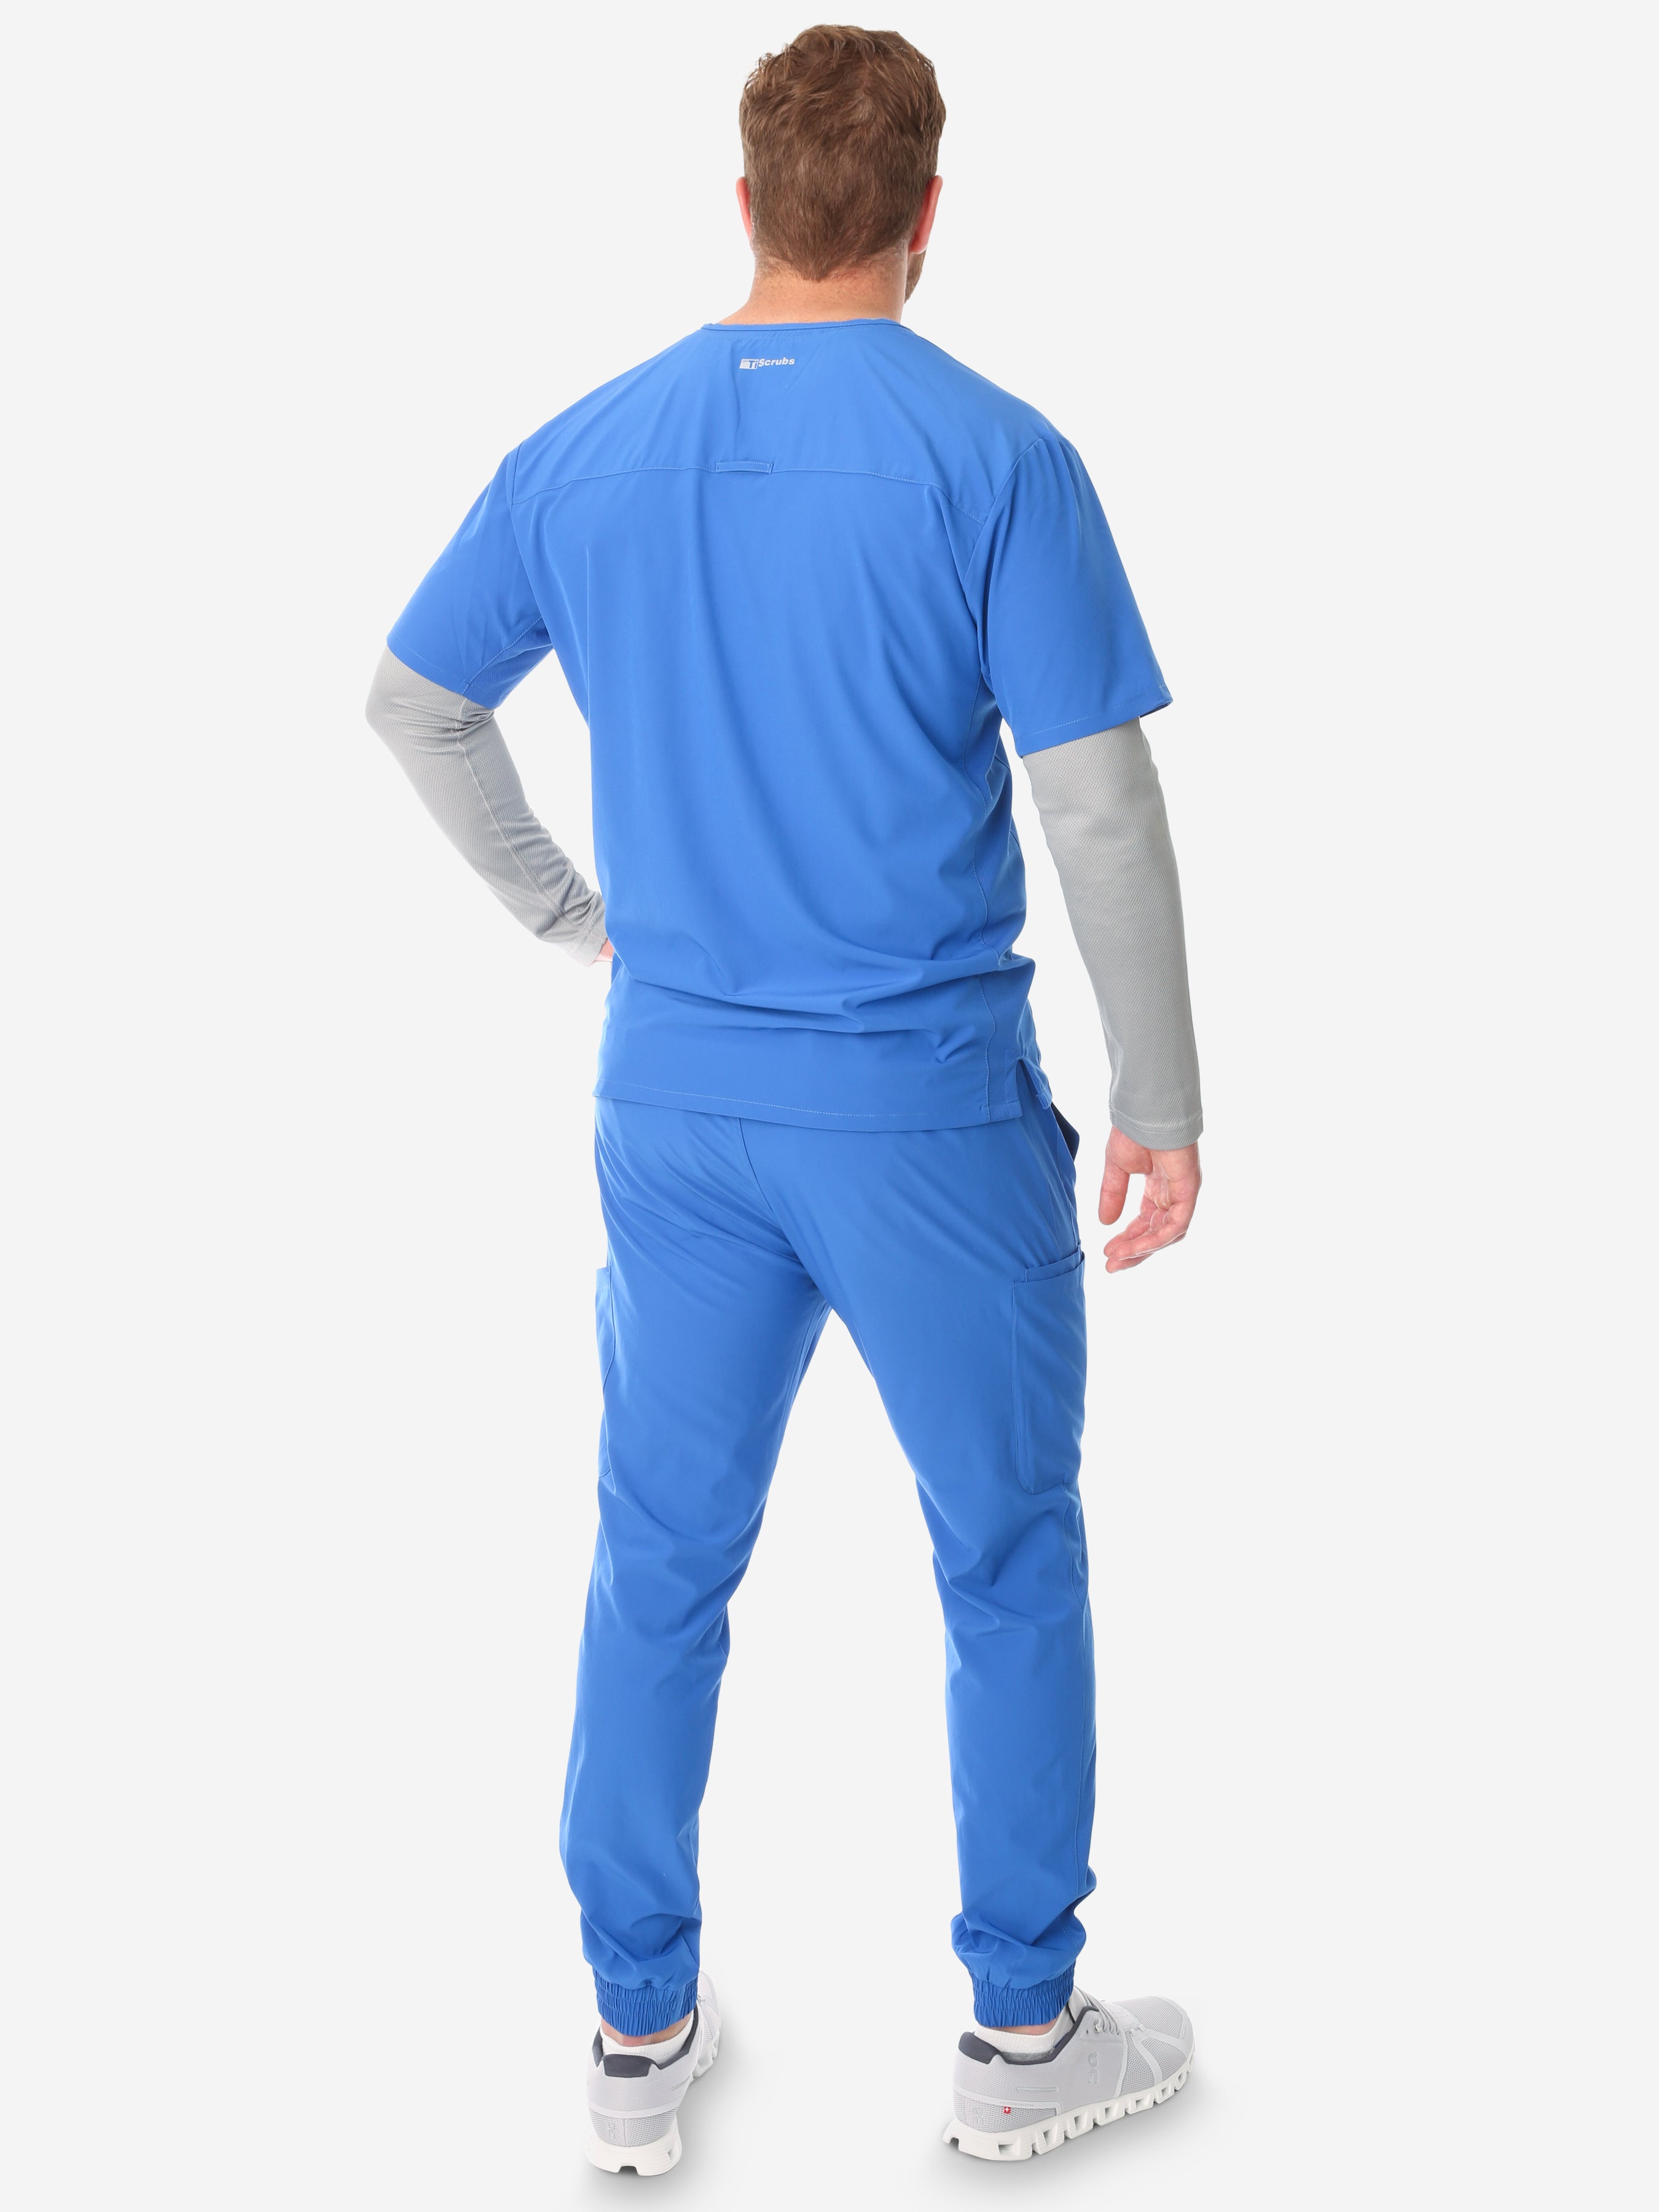 TiScrubs Men's Stretch Royal Blue Double-Pocket Scrub Top and Jogger Pants with Long-Sleeve Titanium Gray Underscrub Full Body Back